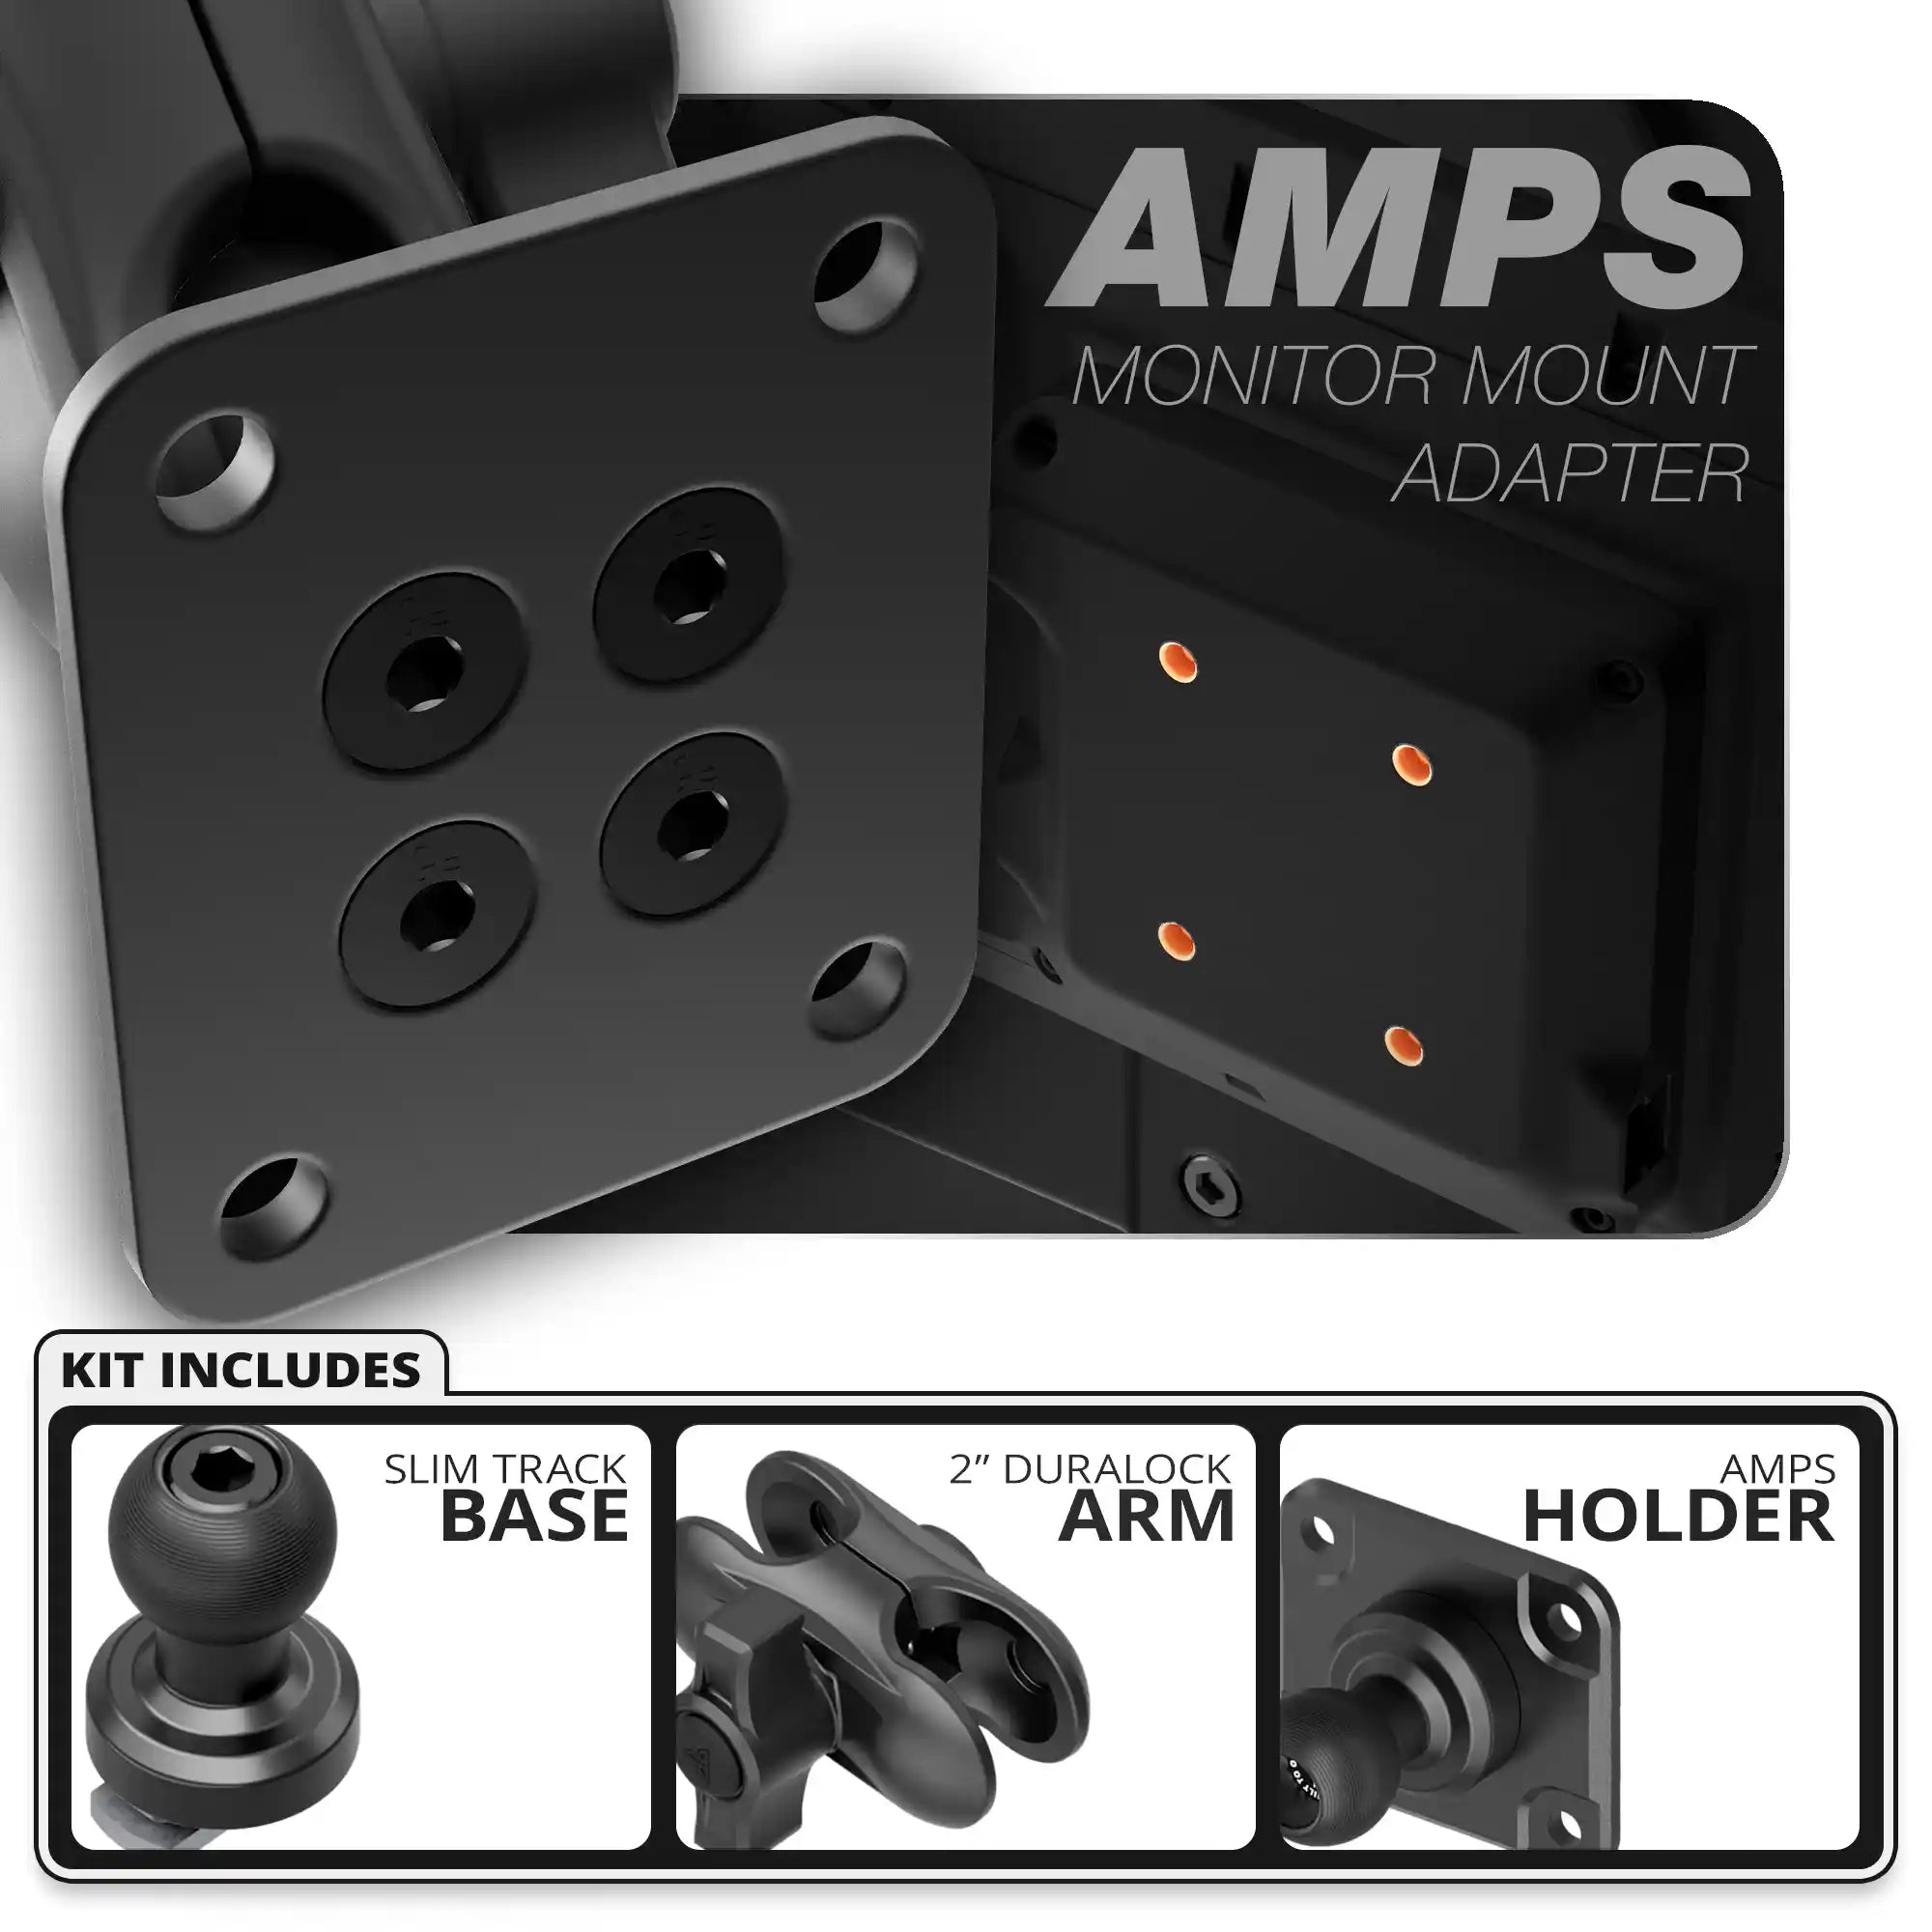 AMPS | Slim Track Base | 2" DuraLock Arm